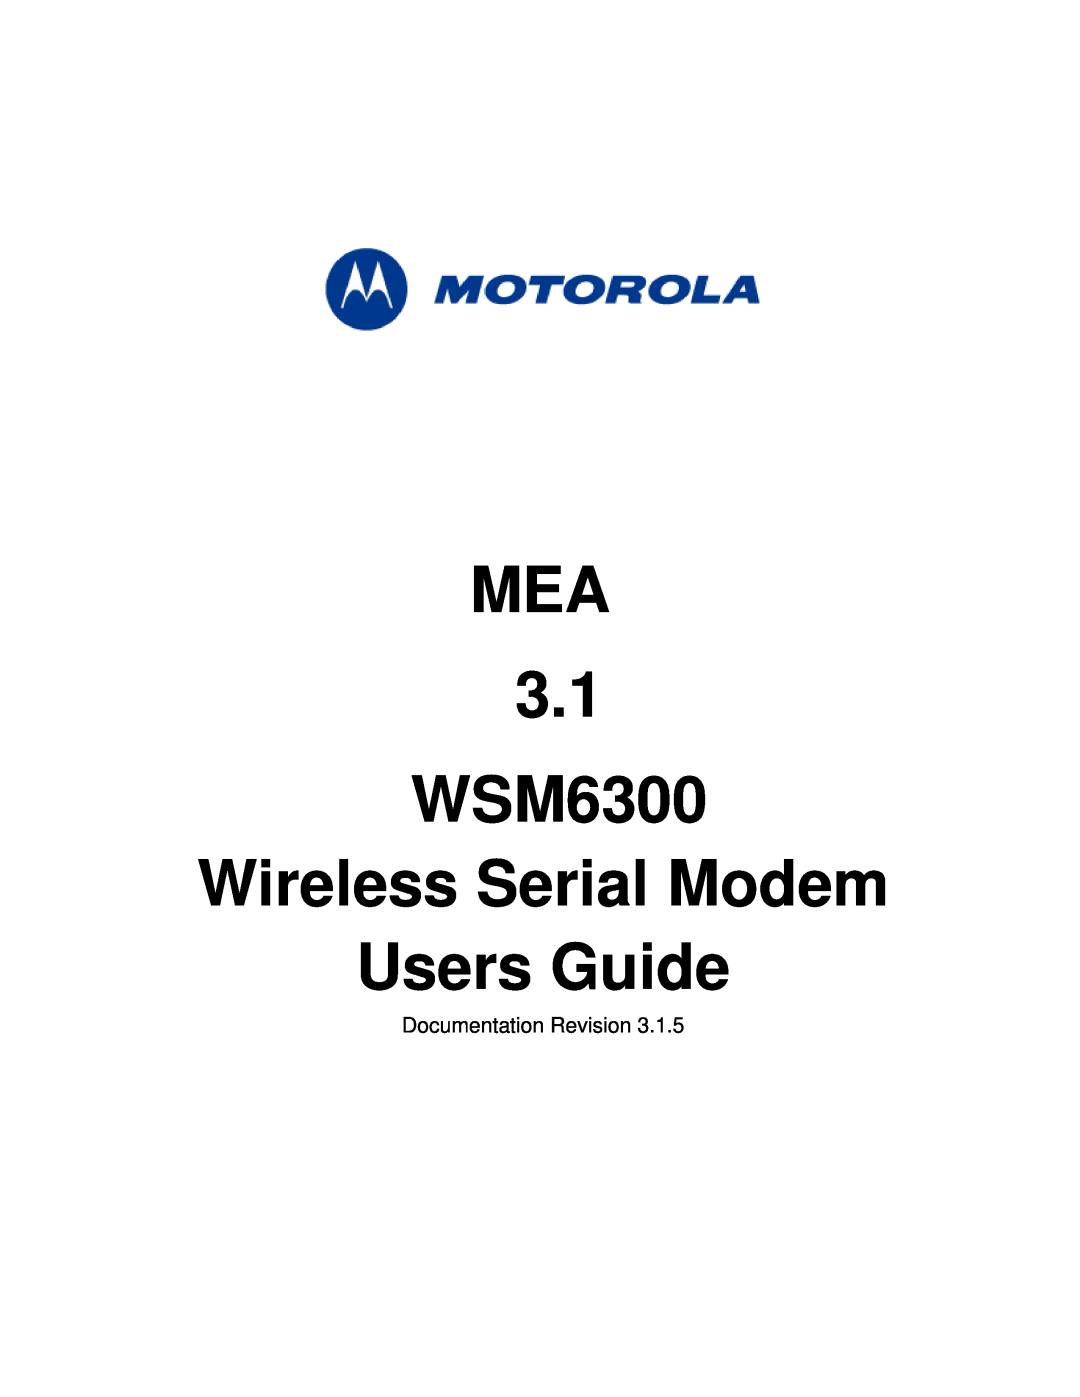 Motorola manual Documentation Revision, MEA WSM6300 Wireless Serial Modem Users Guide 